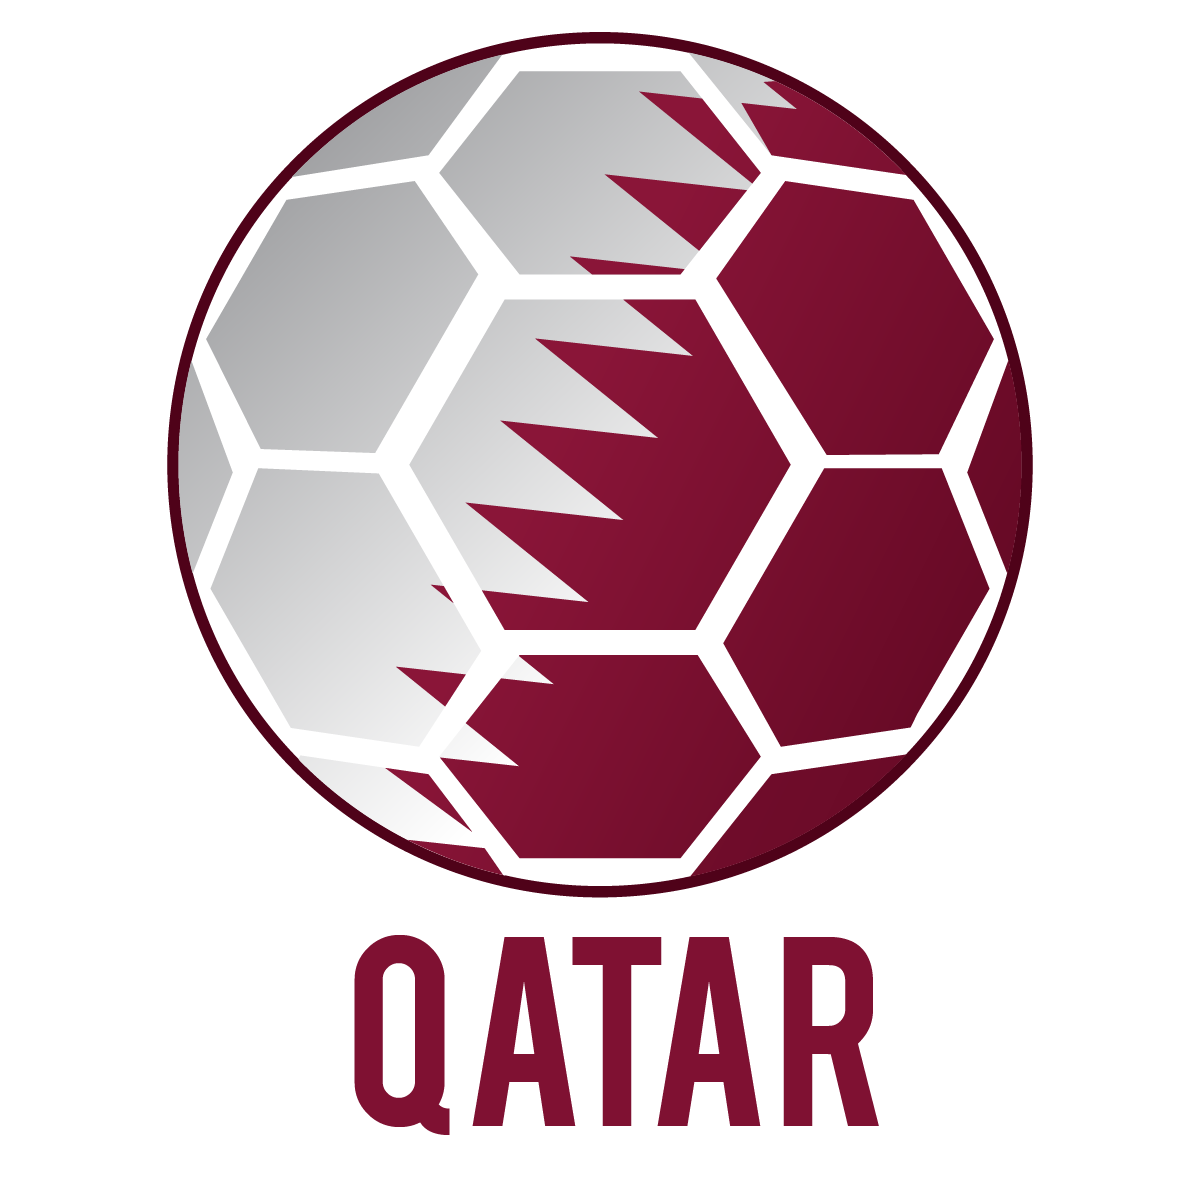 FIFA World Cup Qatar 2022 PNG Image